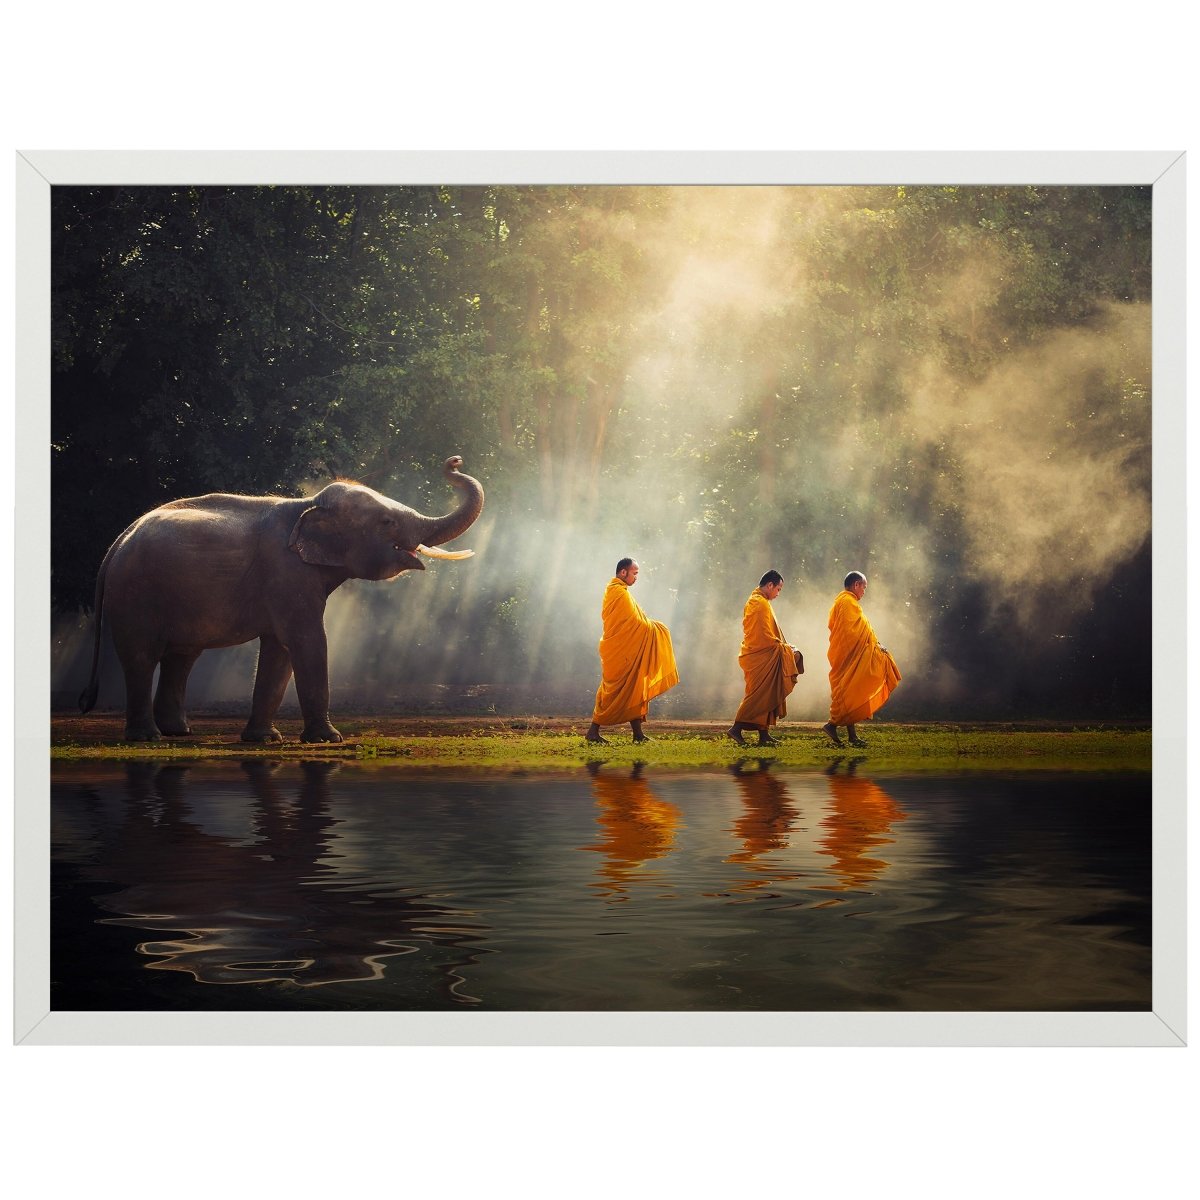 wandmotiv24 Poster, Poster - Elefant, Mönche, Wasser - M0224 - Bild 1